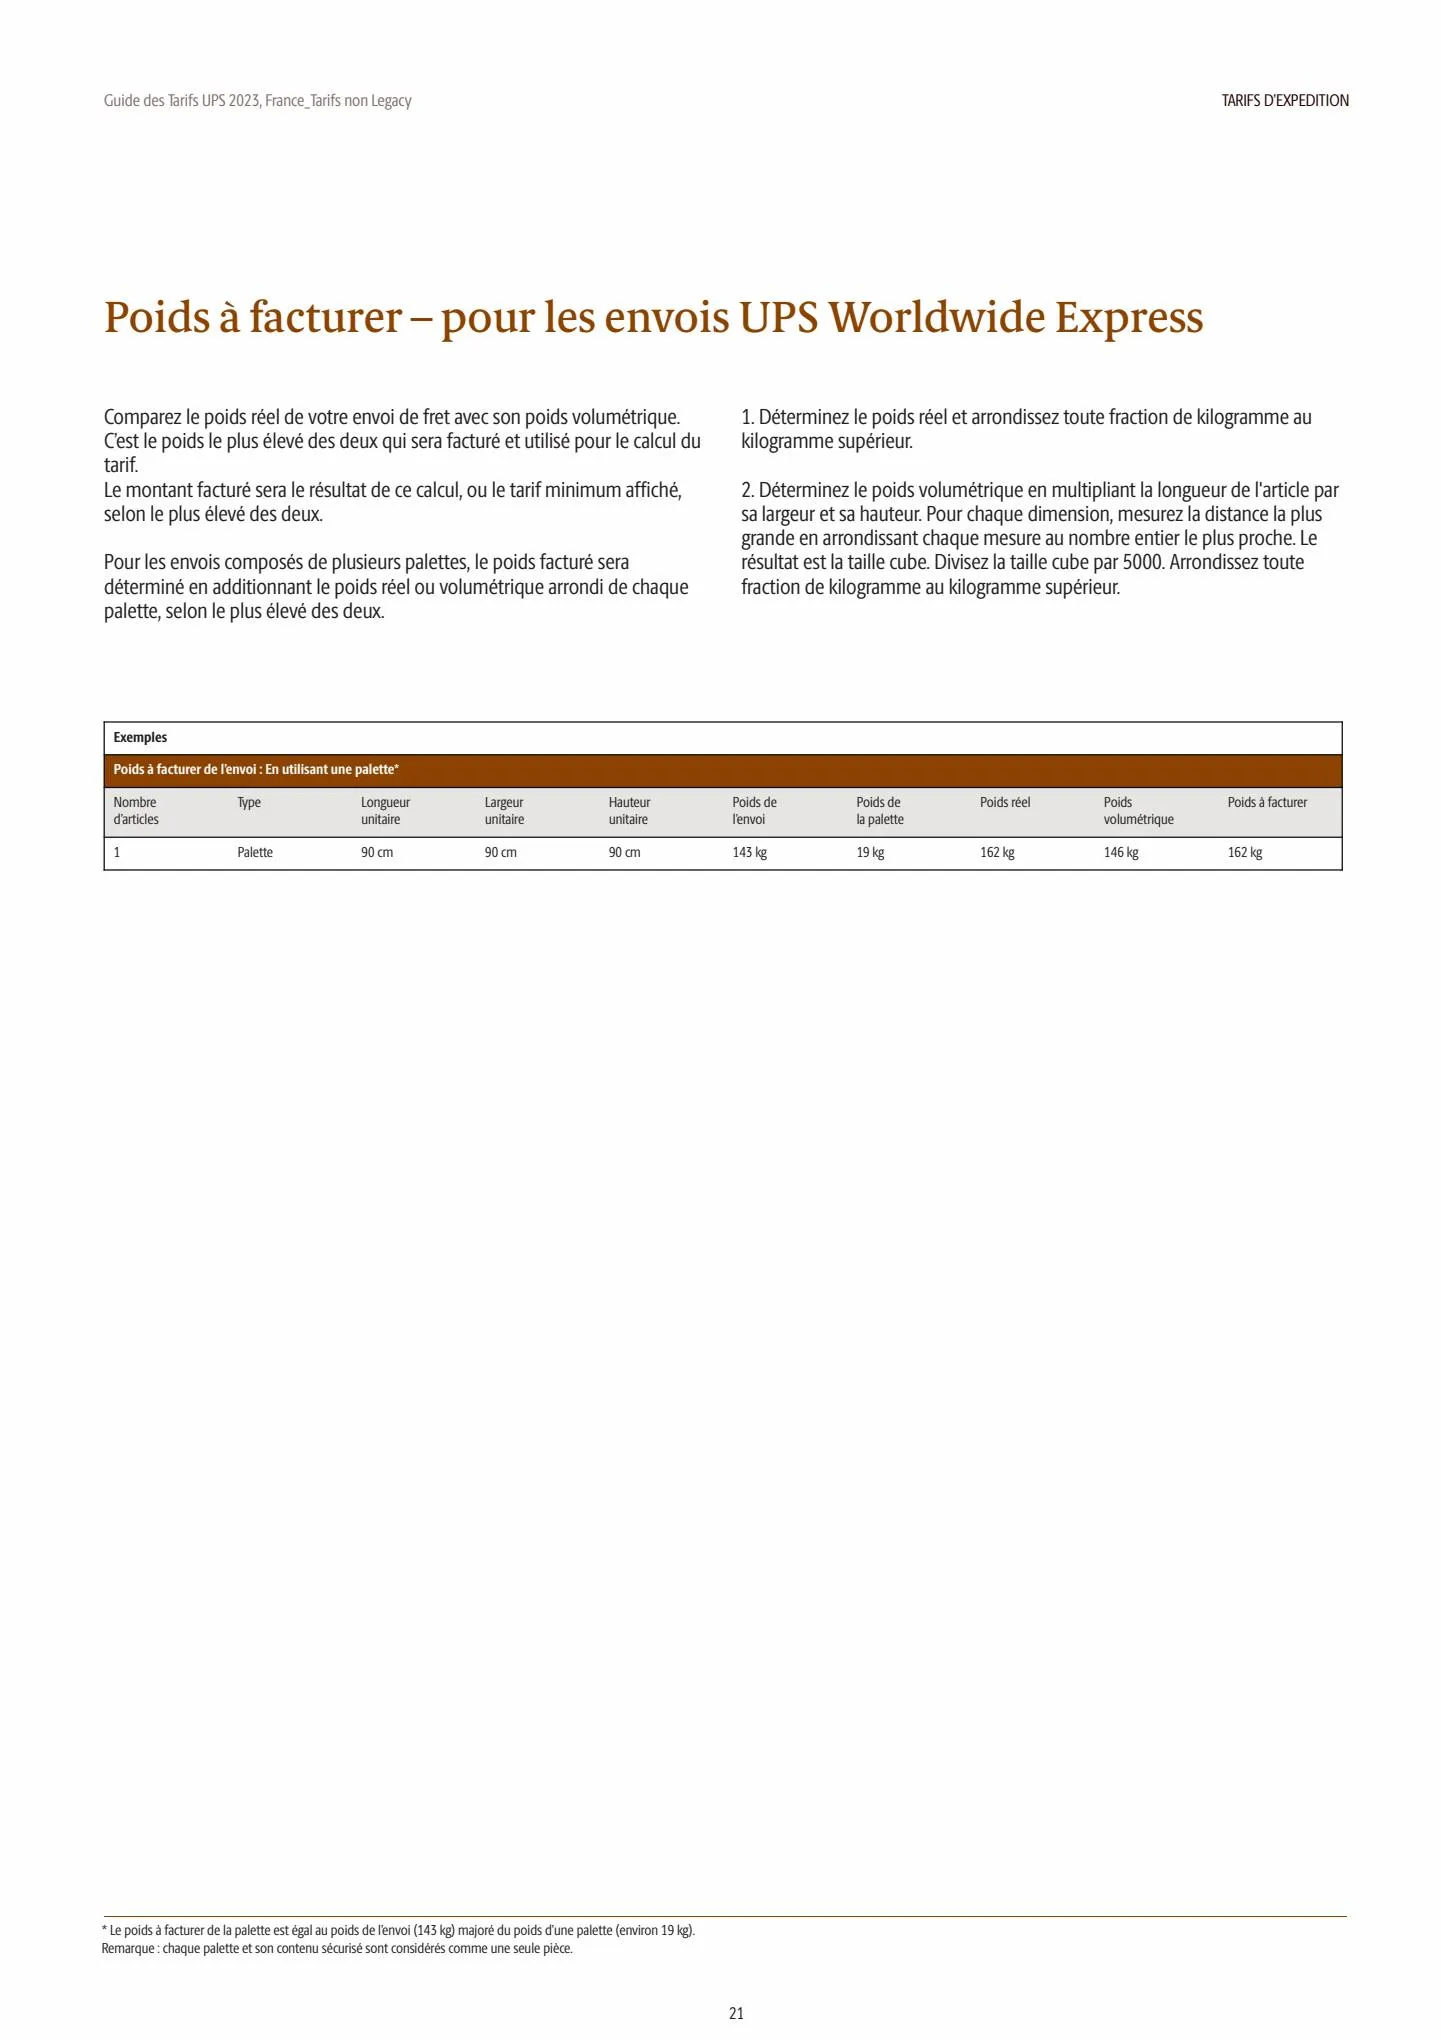 Catalogue France tariff base 2023, page 00021